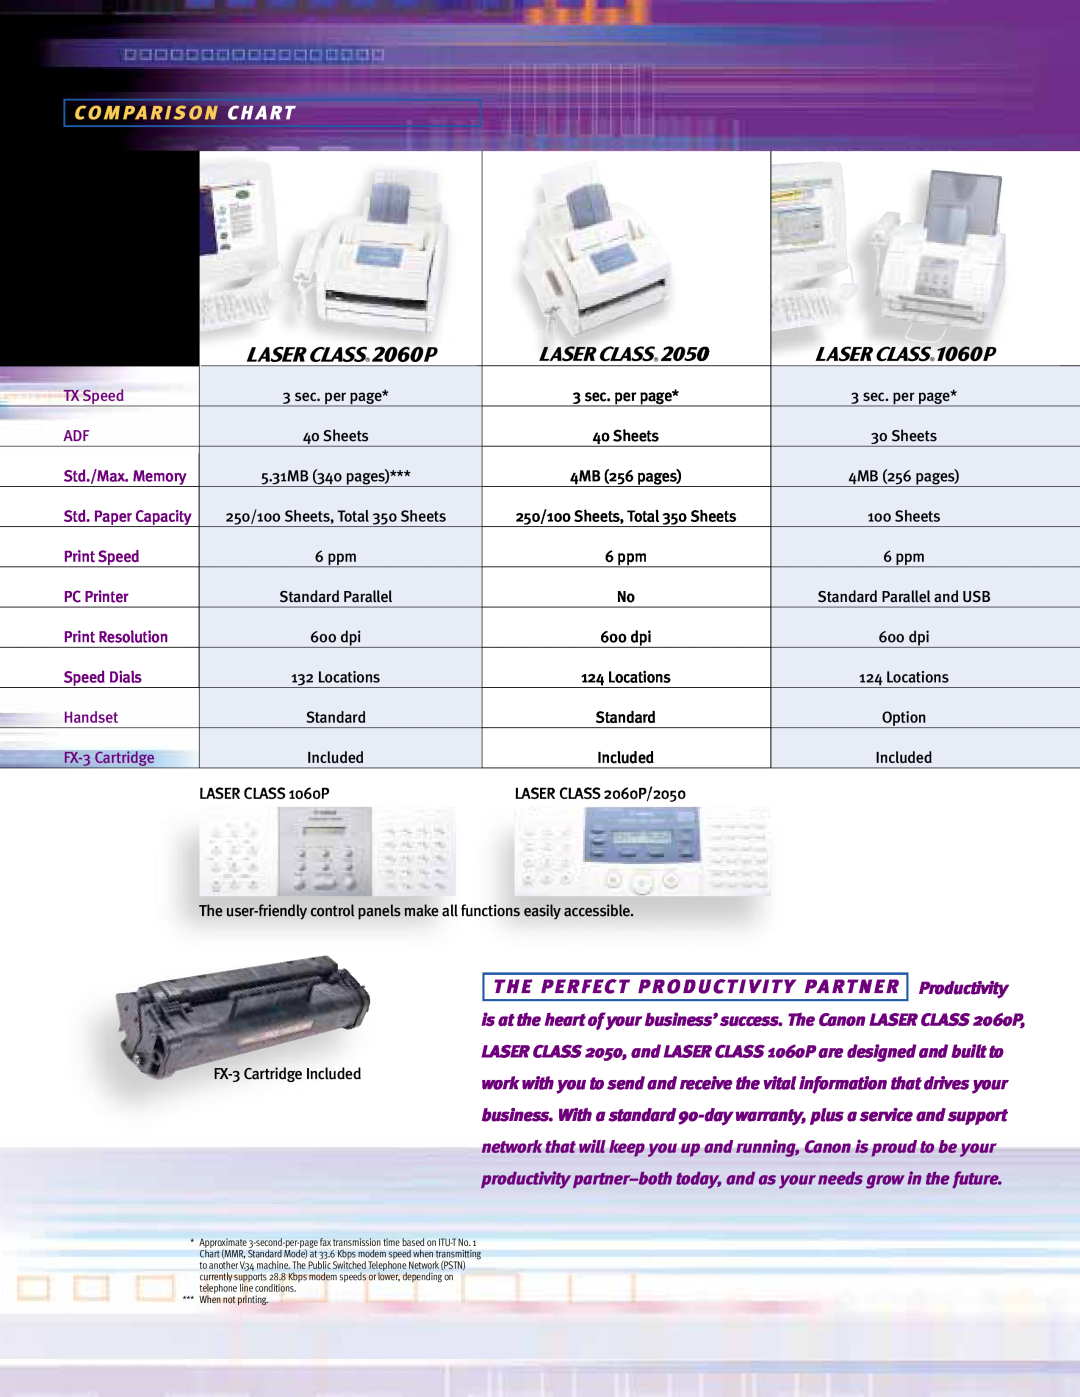 Canon 2050, 2060P C O M P A R I S O N C H A R T, TX Speed ADF Std./Max. Memory, Print Speed PC Printer Print Resolution 